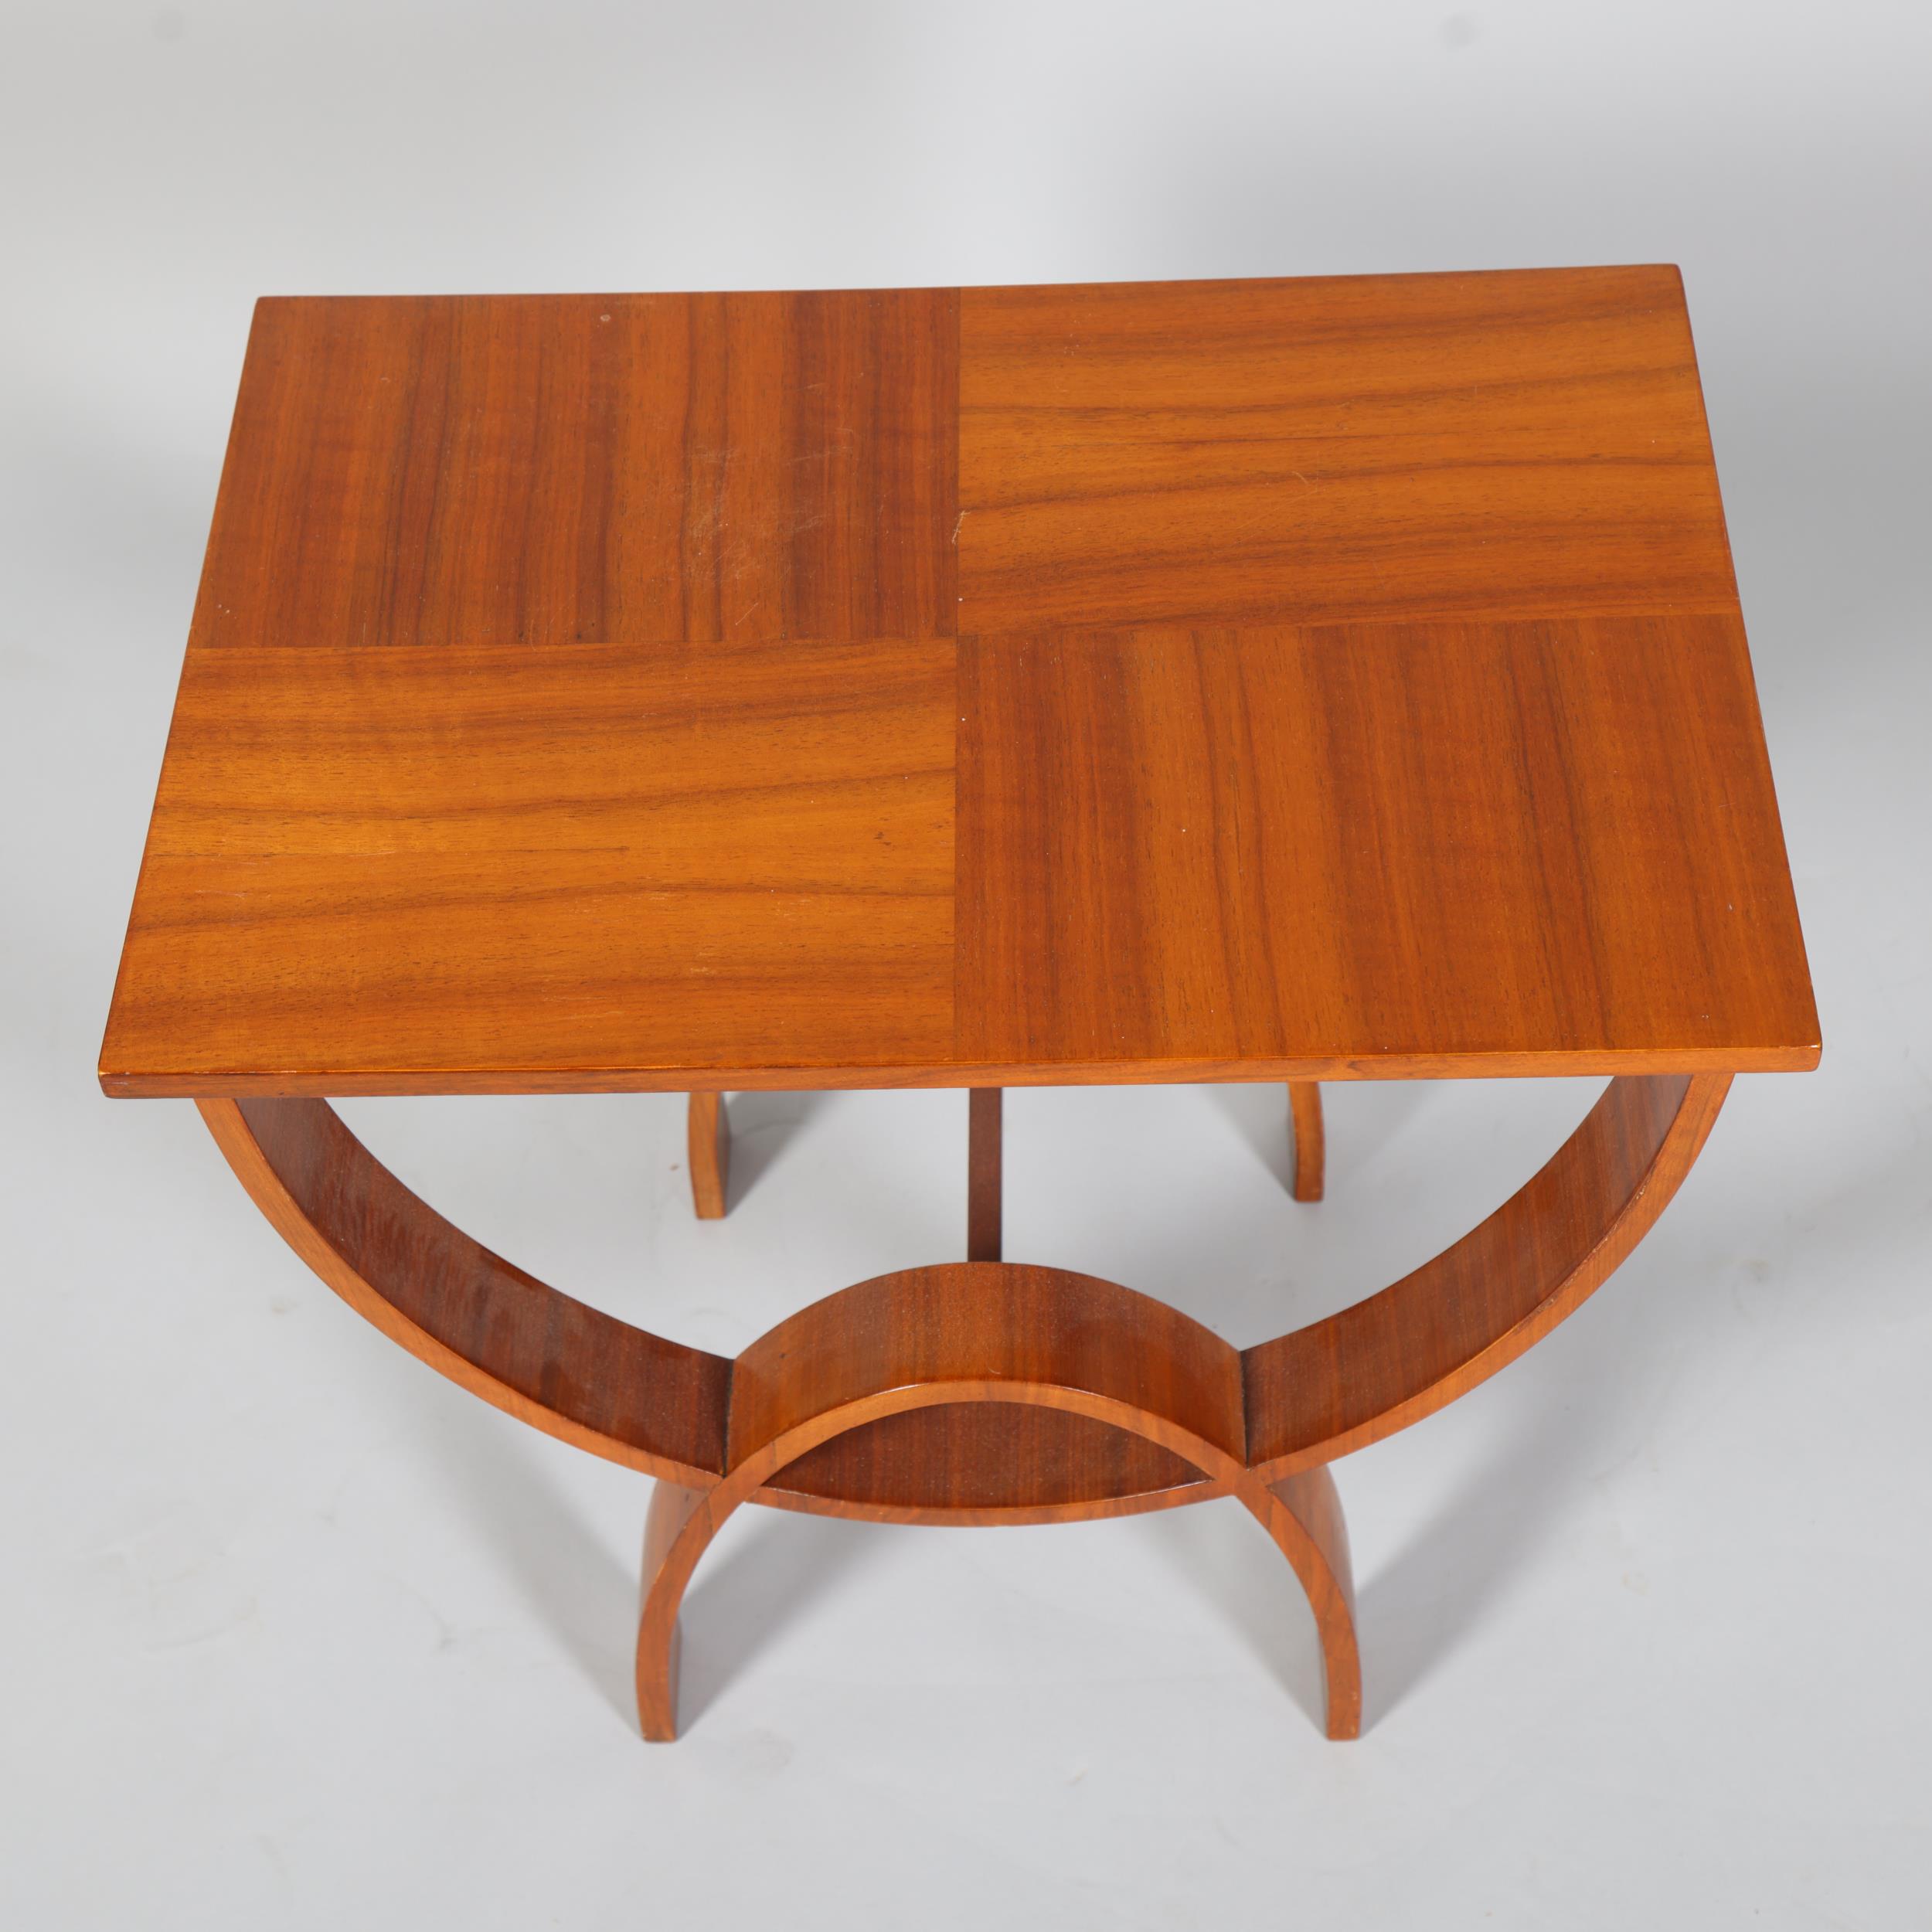 Art Deco walnut rectangular occasional table, with quarter veneer top, 58cm x 41cm, height 53cm - Image 2 of 3